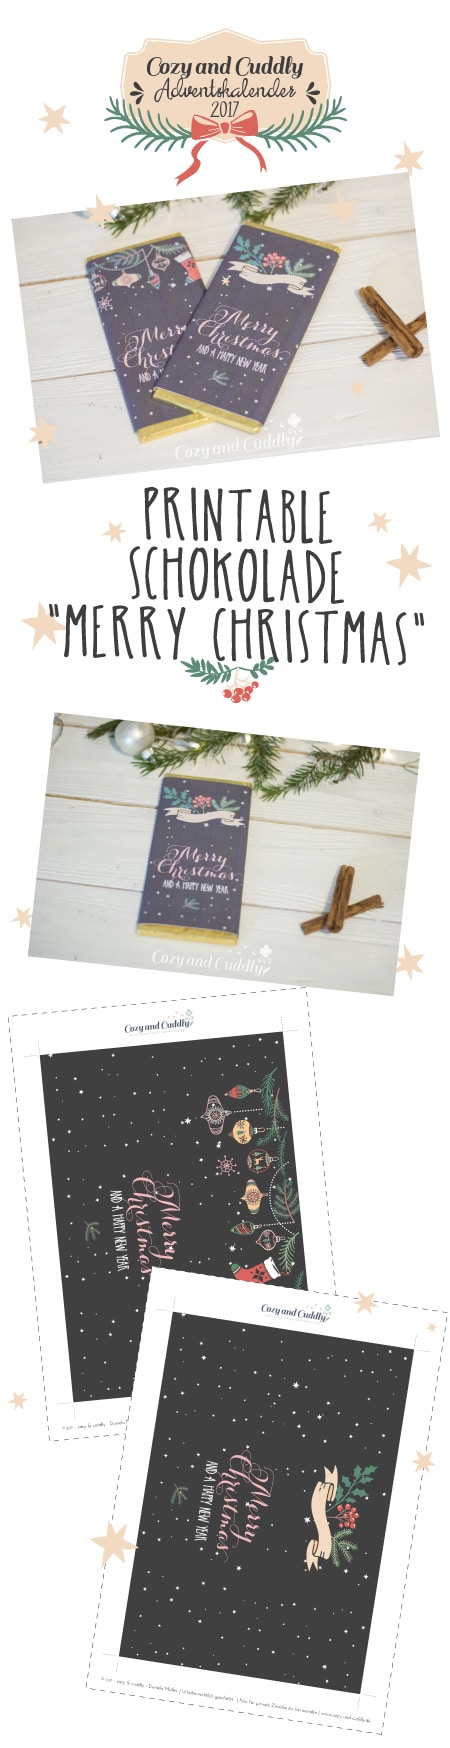 Advent: Last-Minute Printable für Schokolade als Weihnachtsgruß - Christmas Greetings Chocolate - cozy and cuddly Adventskalender